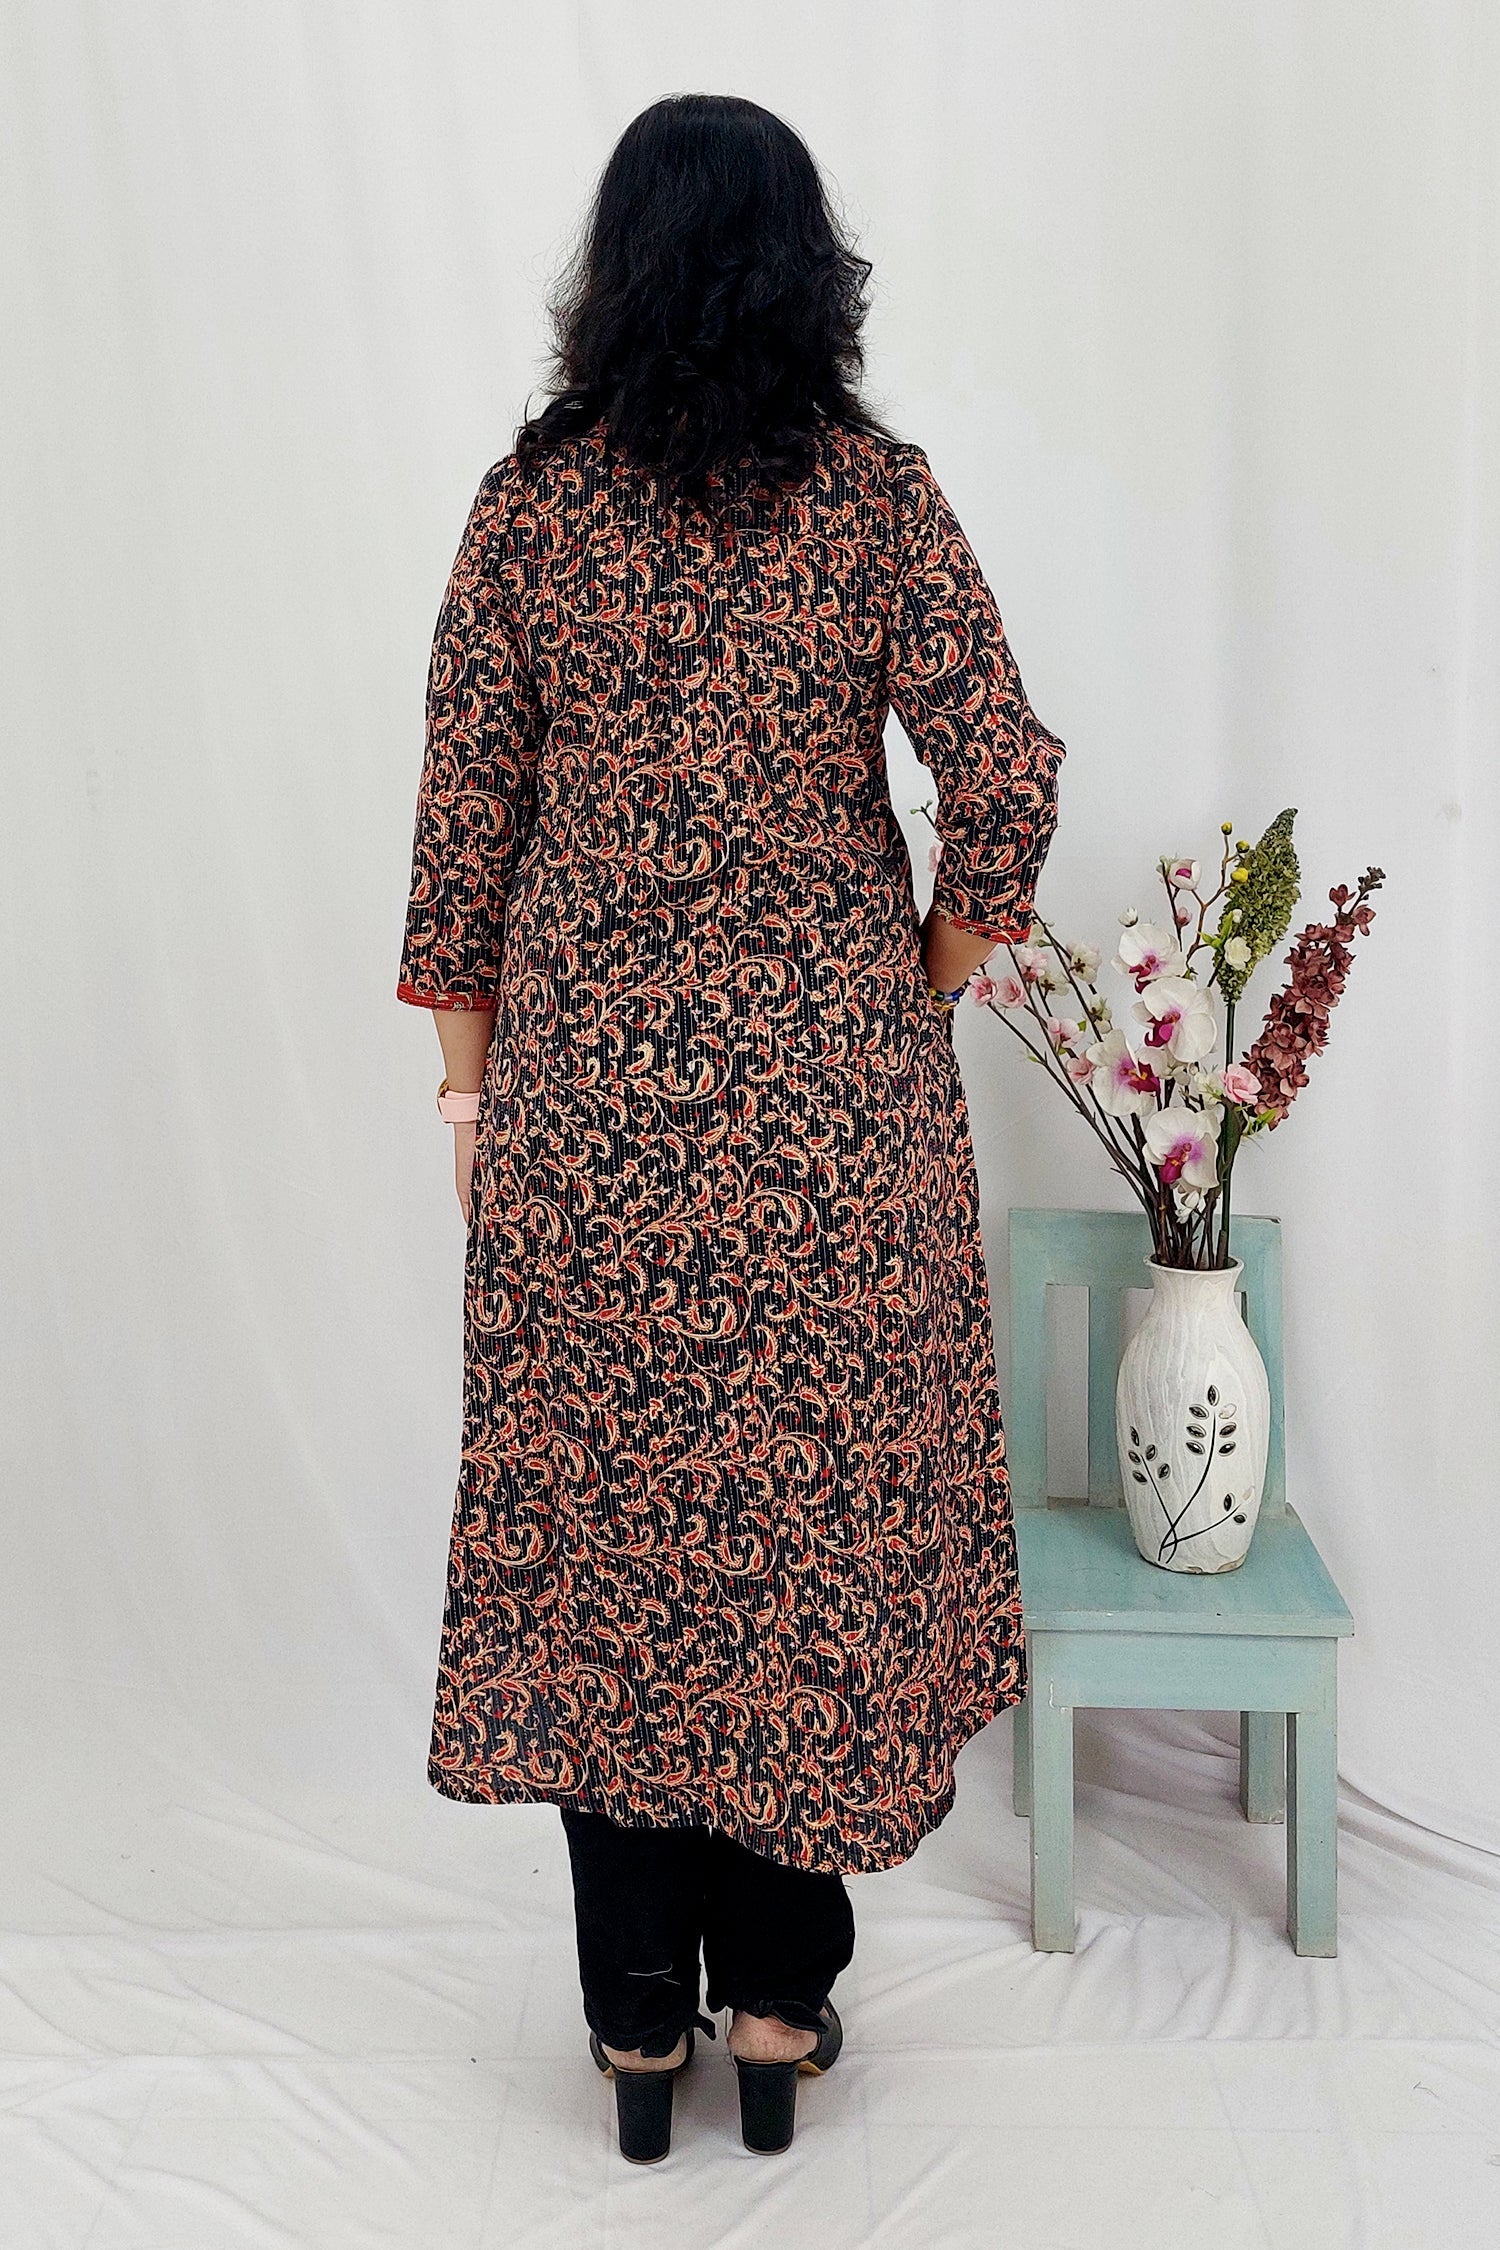 Printed Cotton Kurta Pant Set with Dupatta 3 pc kurta set Printed Kantha Cotton Maxi Dress/Shrug Dress 